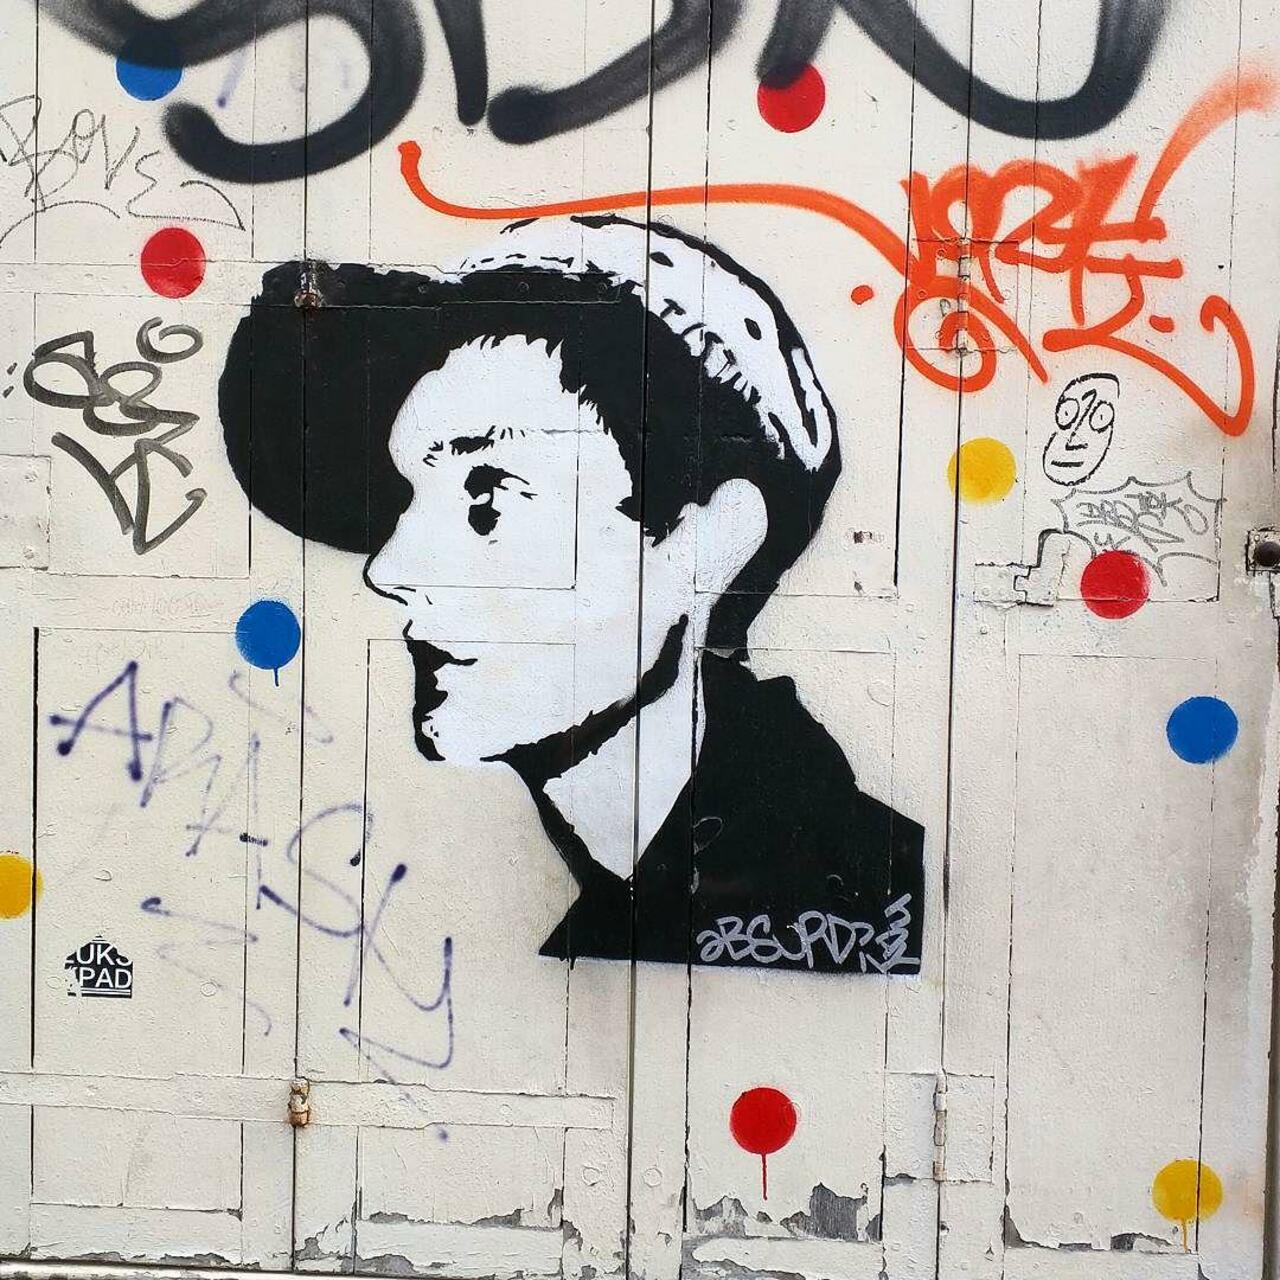 circumjacent_fr: #Paris #graffiti photo by alphaquadra http://ift.tt/1KWqsiZ #StreetArt http://t.co/SEJGEPcyk4